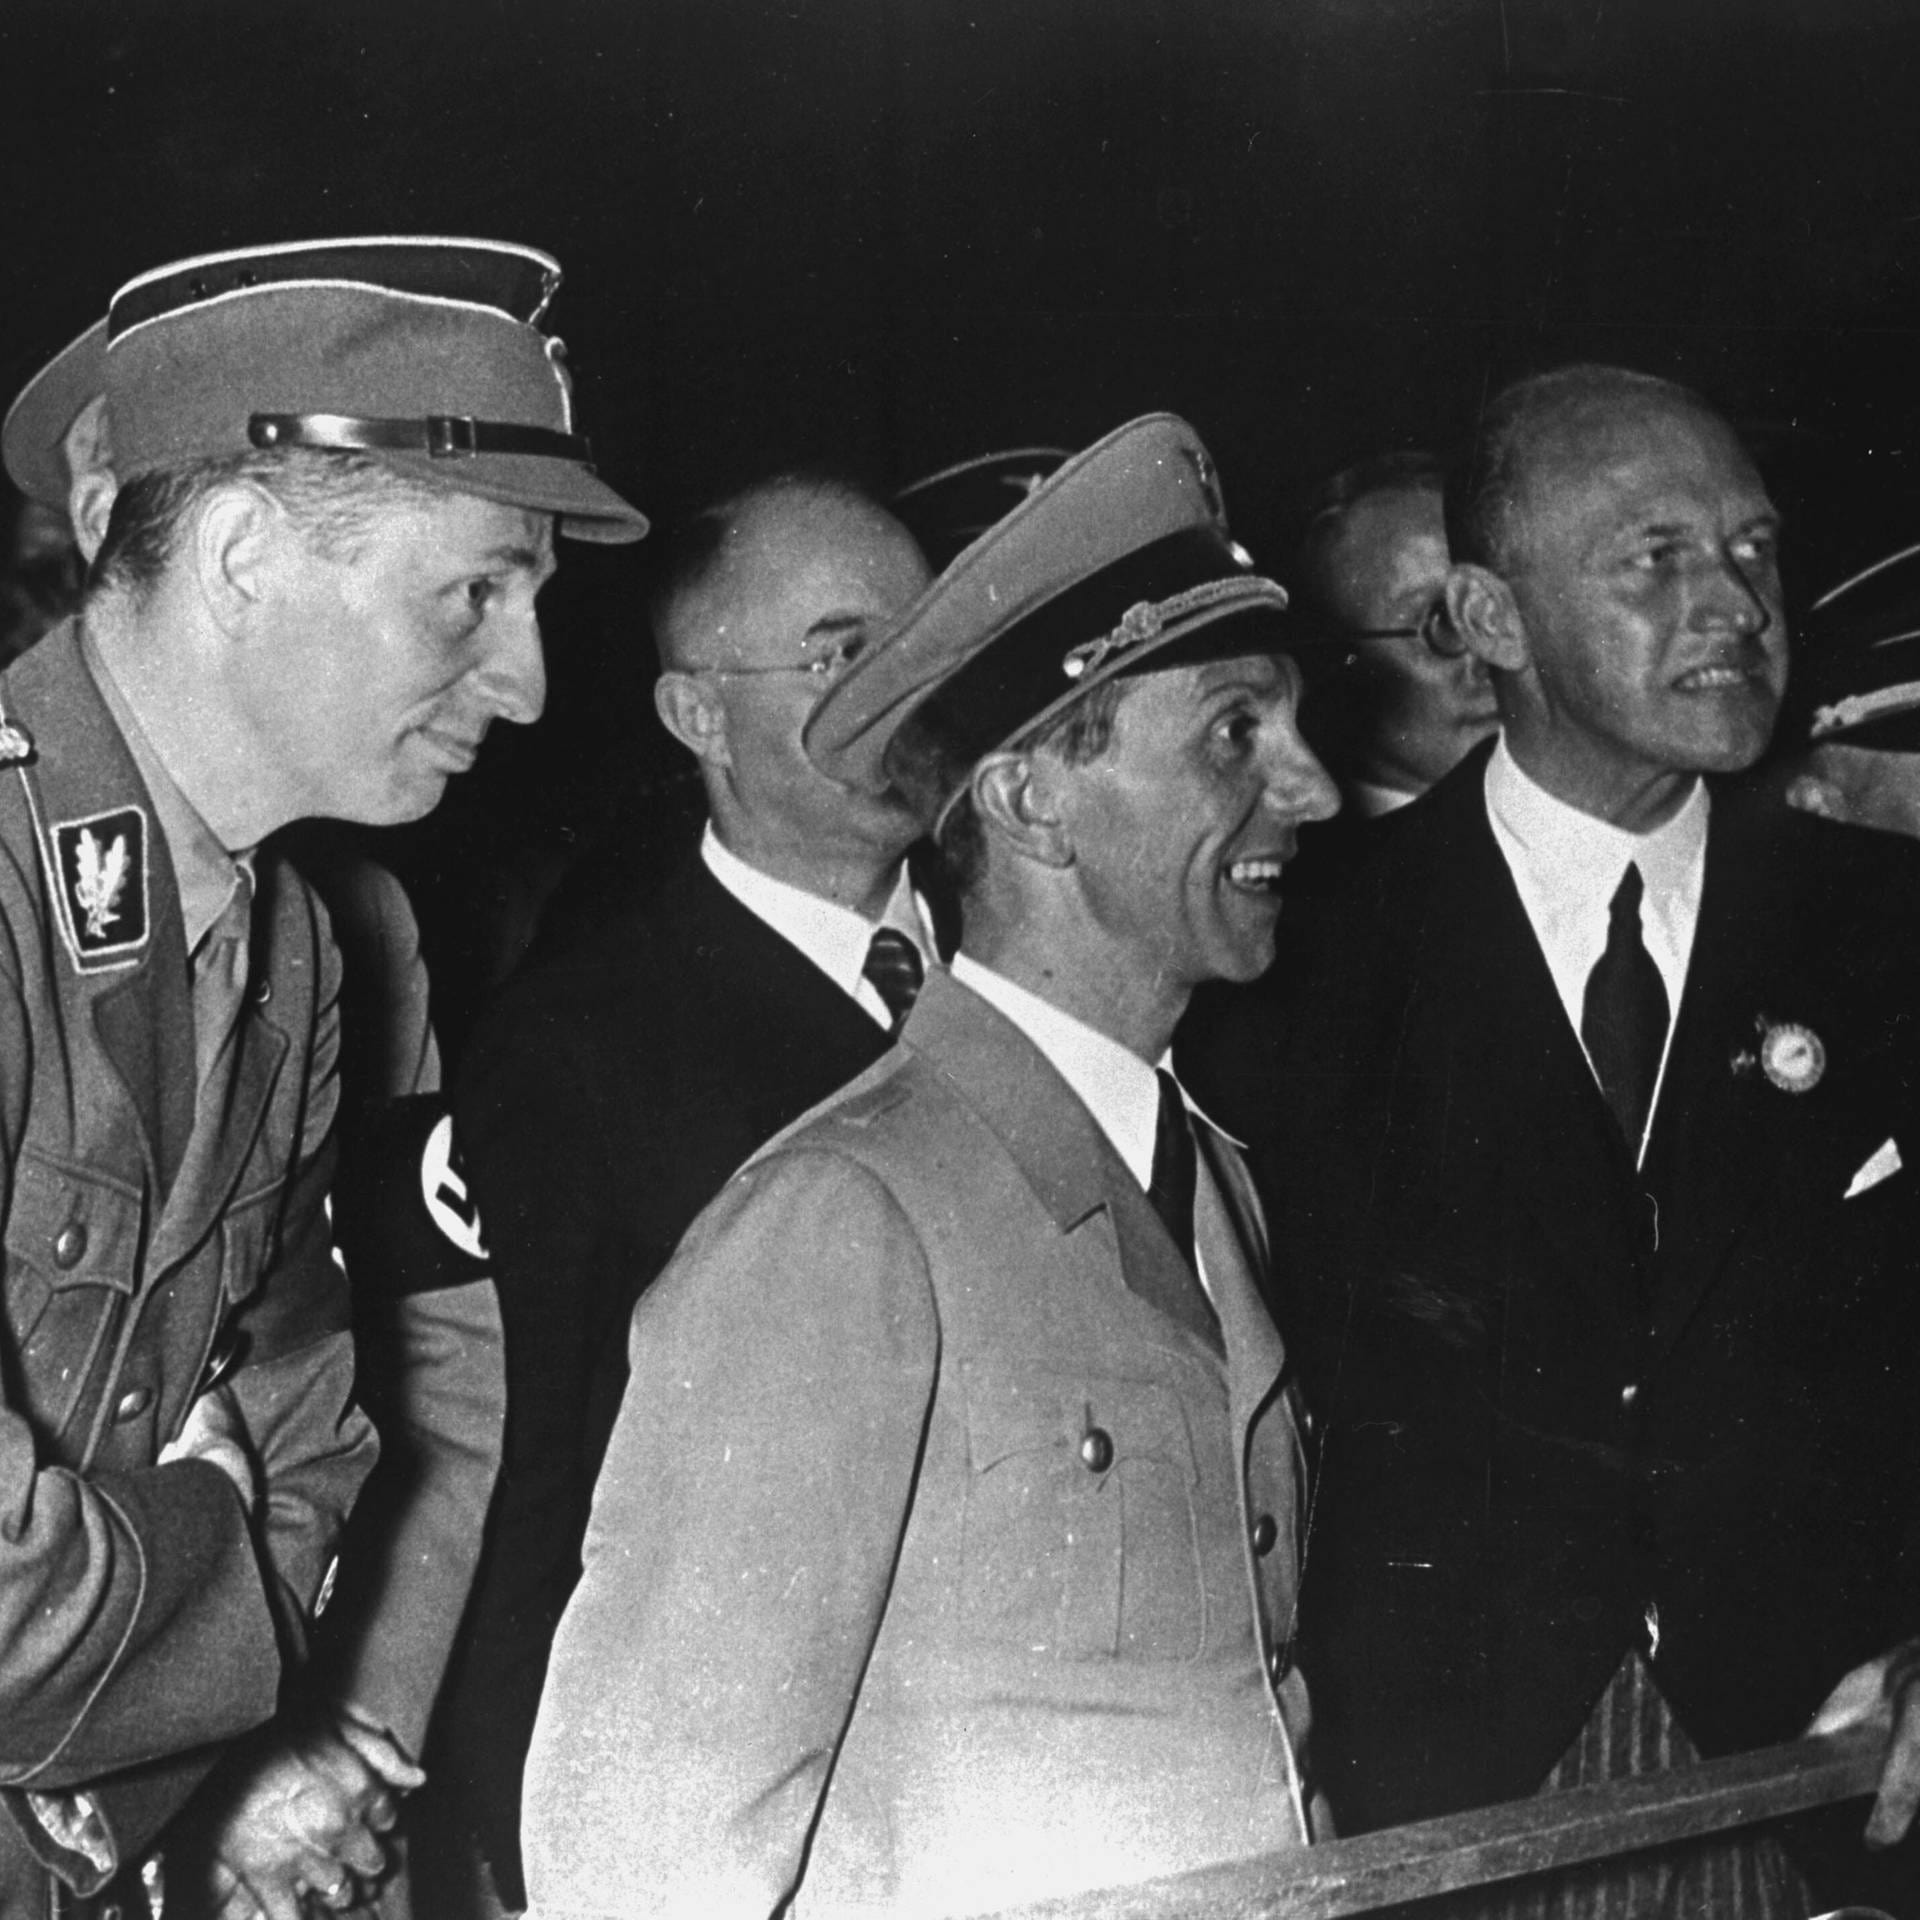 Goebbels‘ Swing-Band – Musik als Propagandamittel